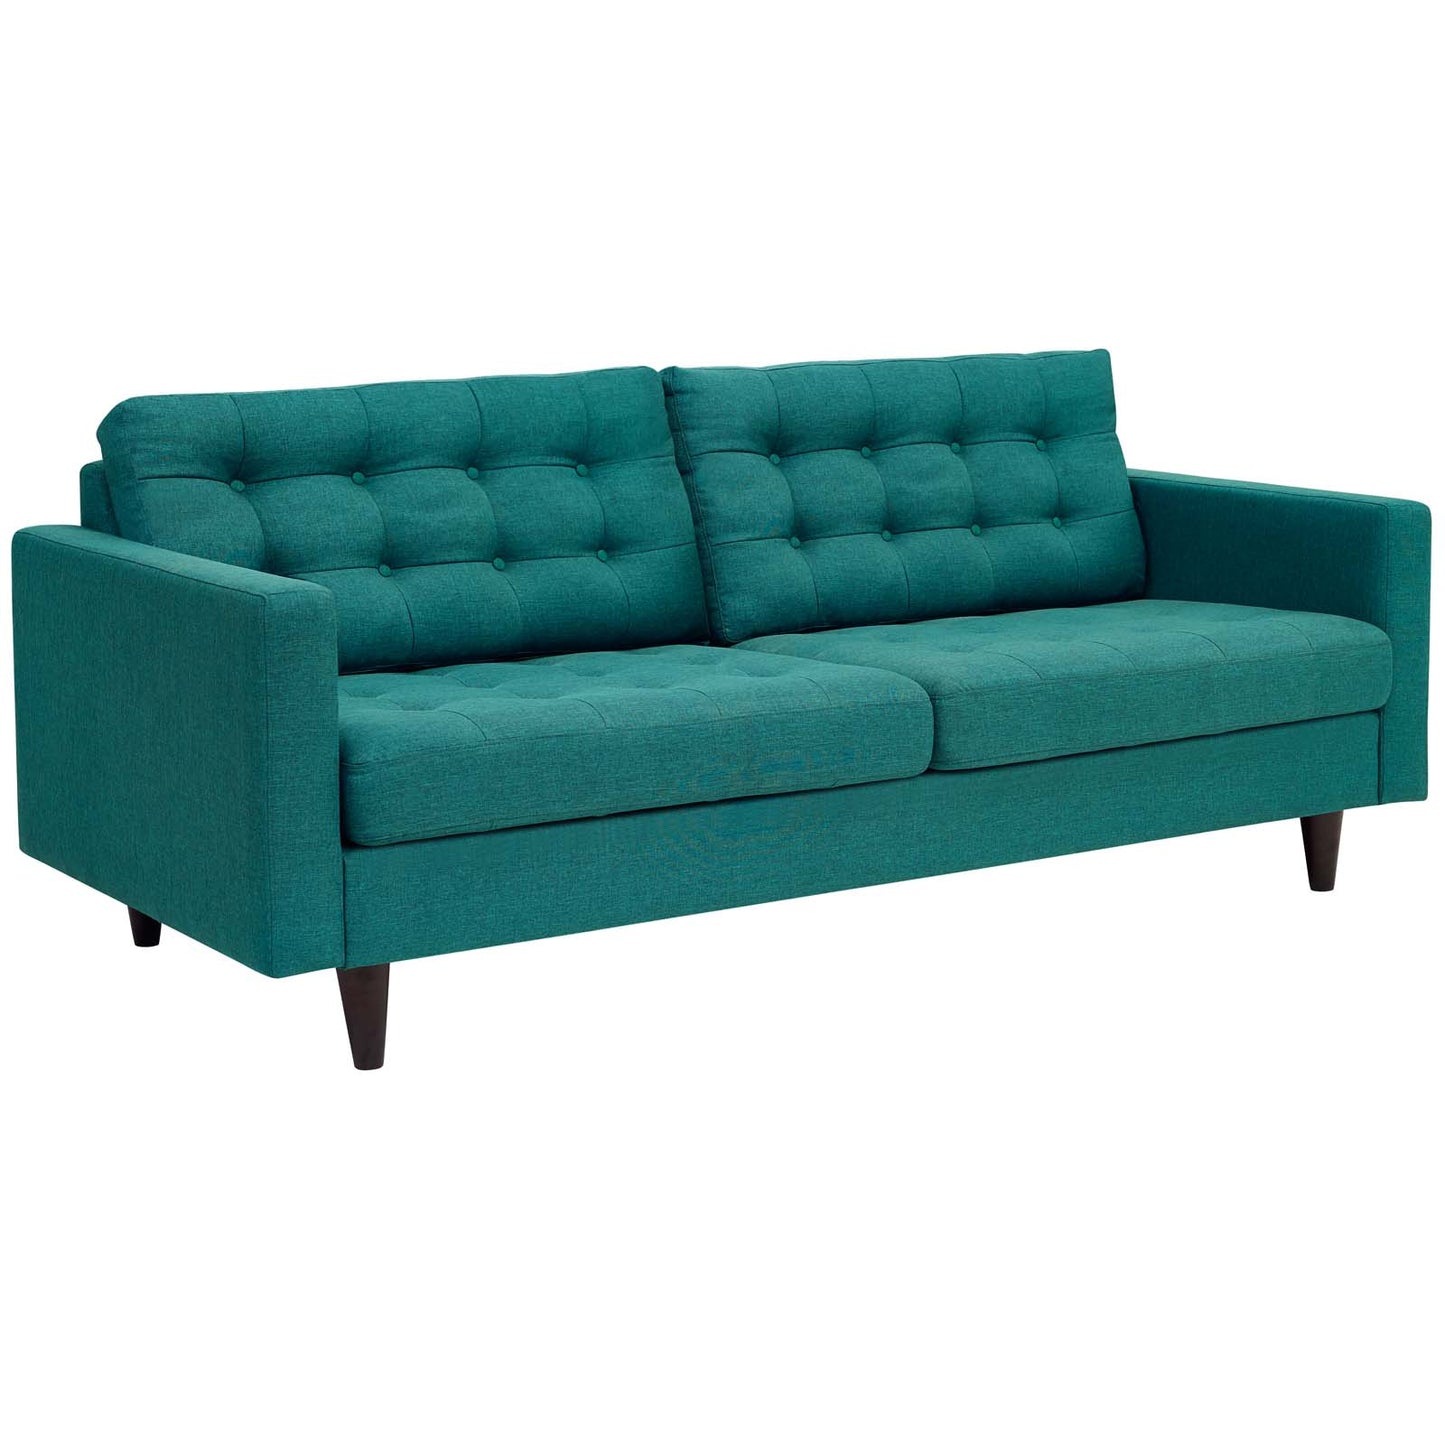 Empress Upholstered Fabric Sofa Teal EEI-1011-TEA